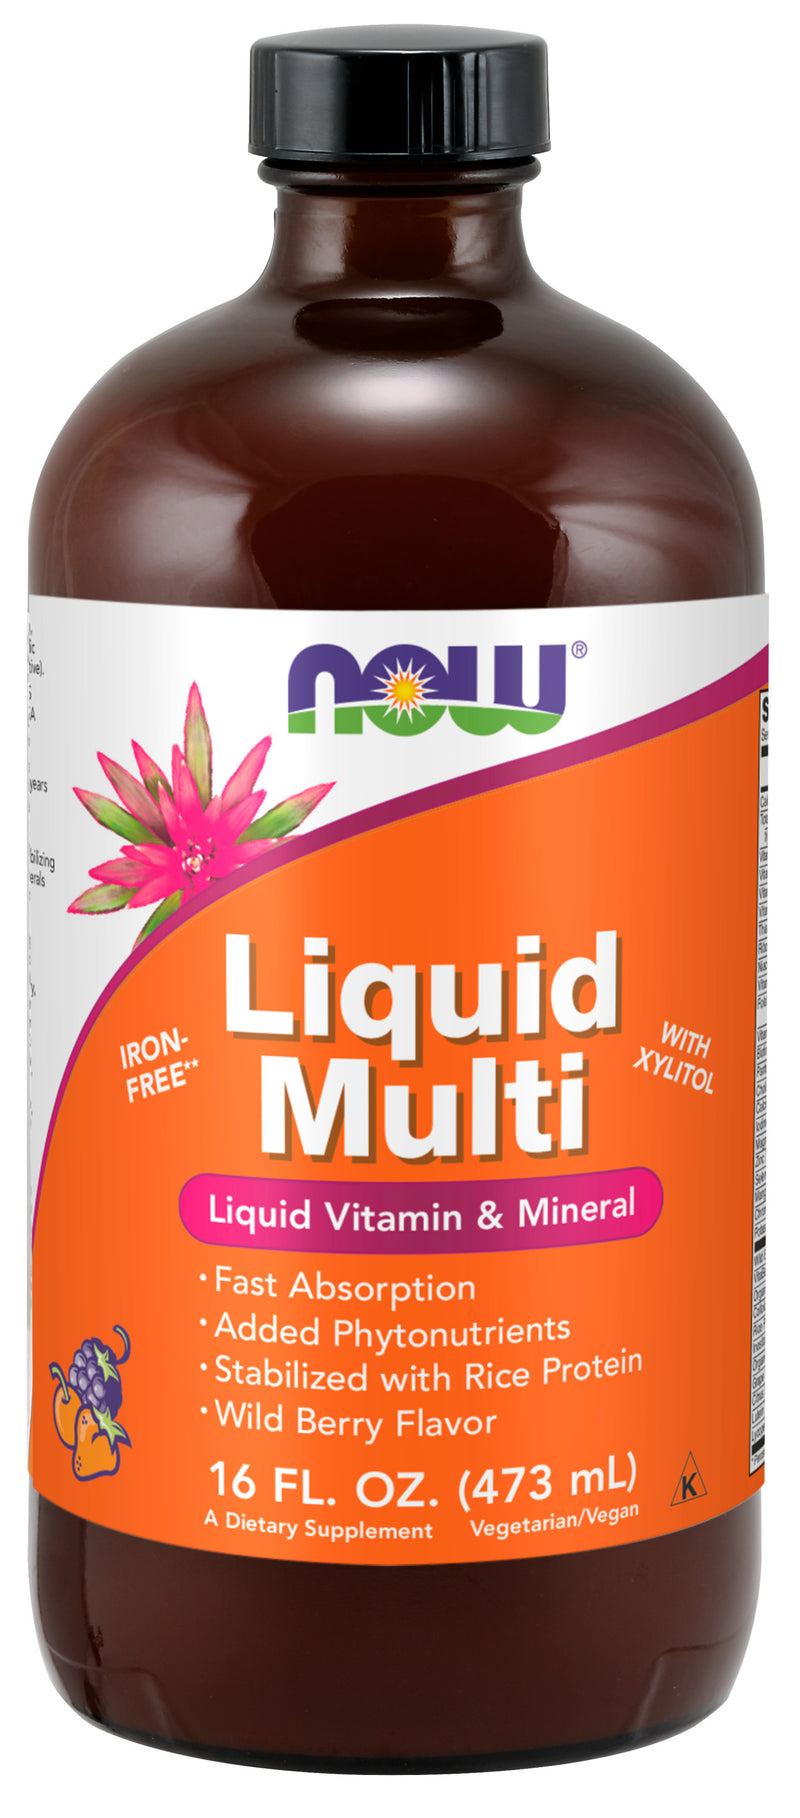 Liquid Multi Wild Berry Flavor 16 fl oz (473 ml)